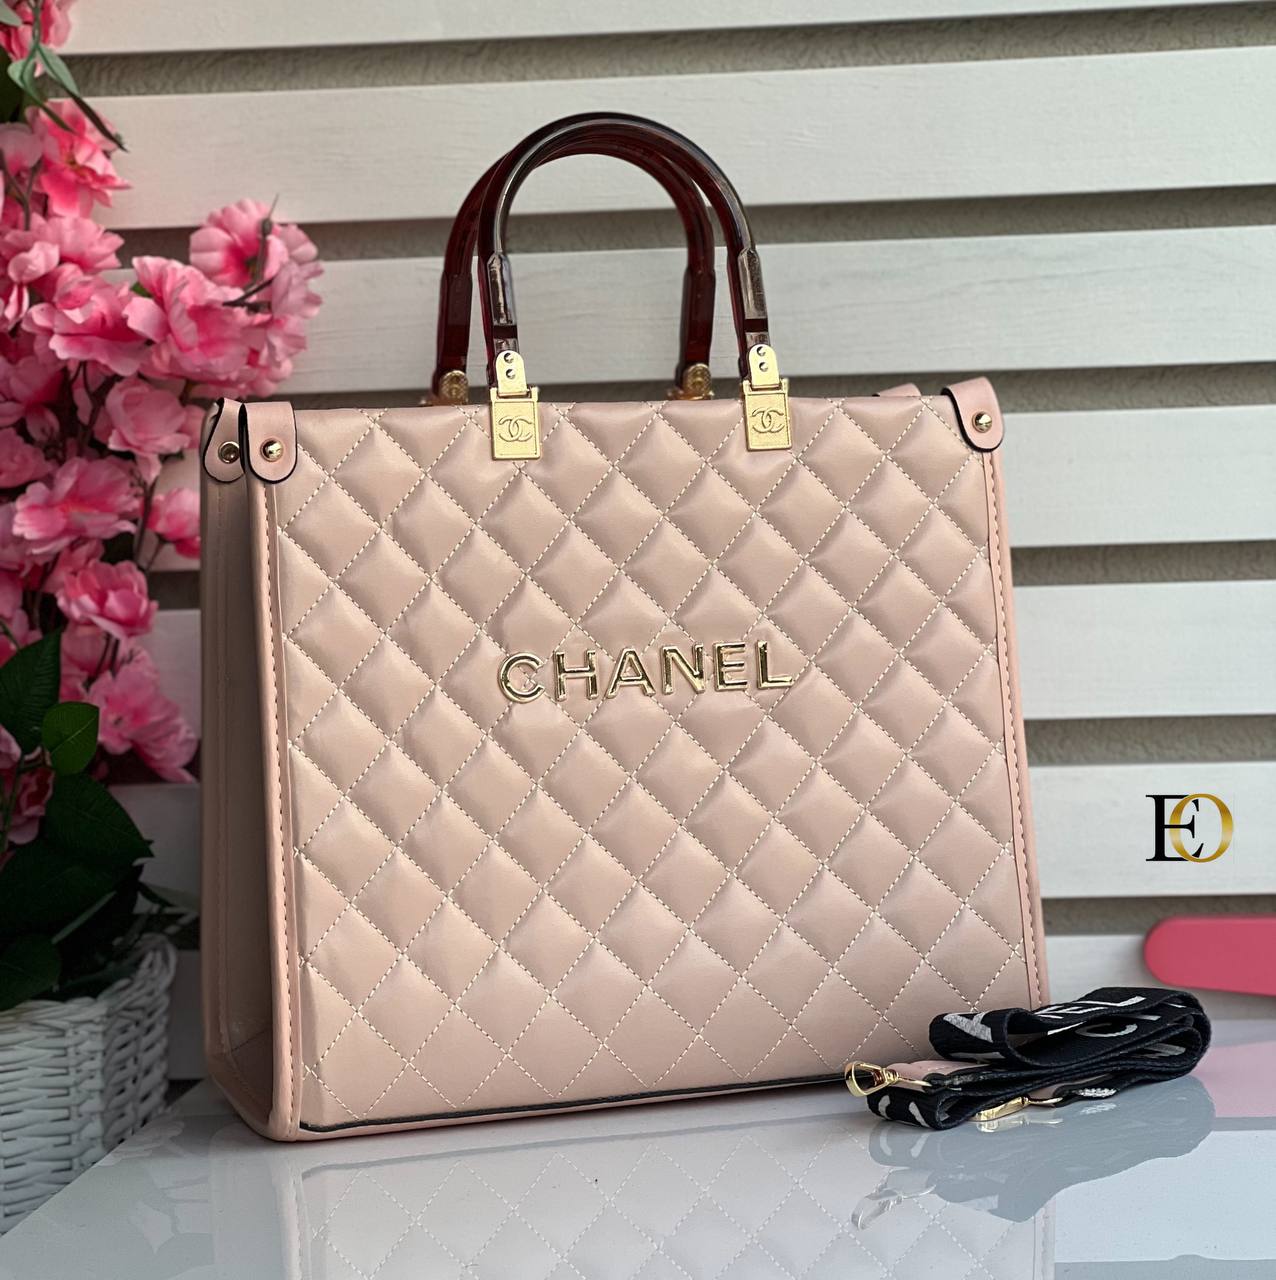 Chanel preowned tote handbags